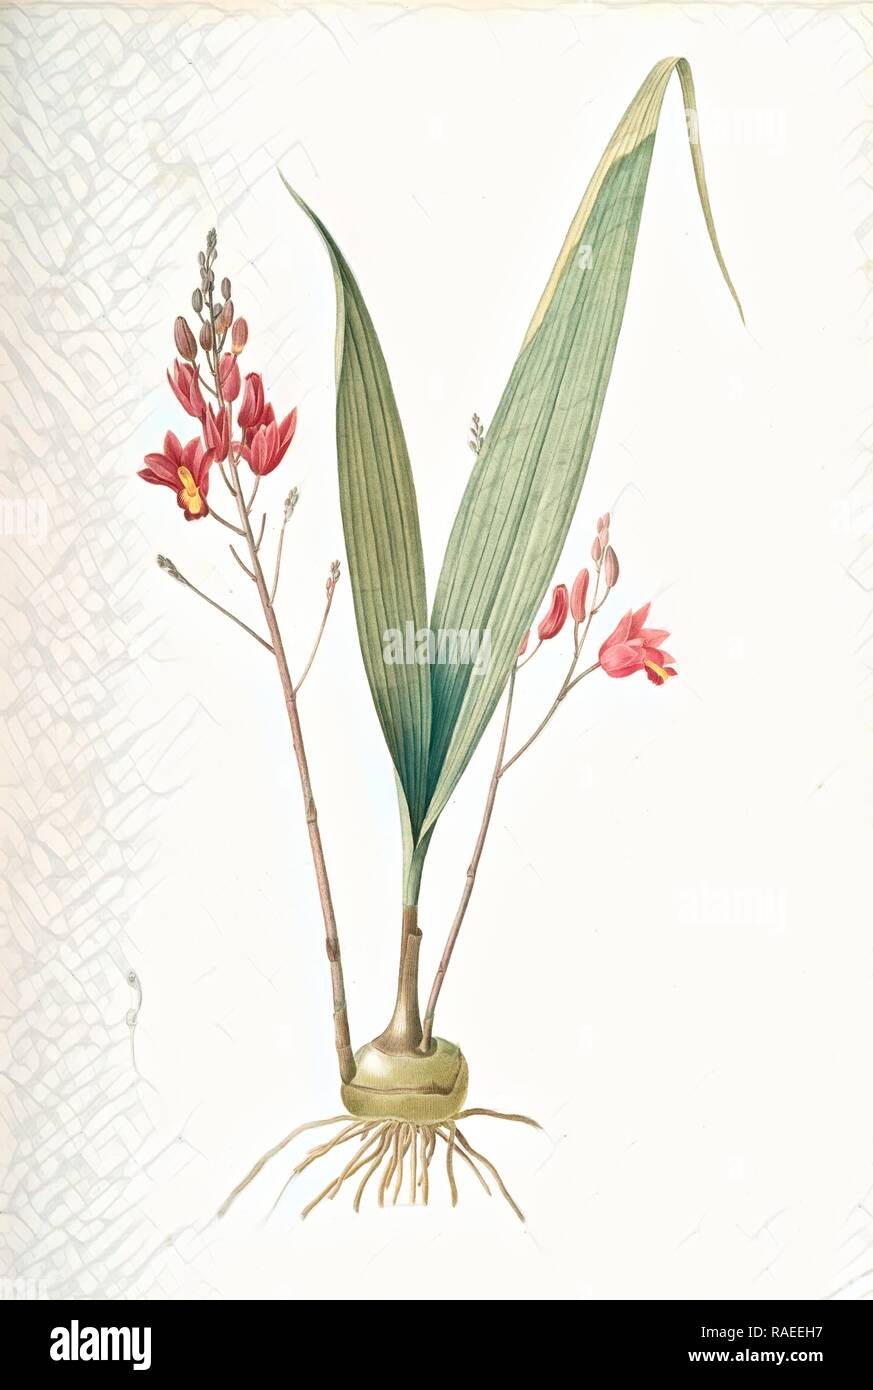 Limodorum purpureum, Bletia verecunda, Limodore pourpre, Pine pink, Redouté, Pierre Joseph, 1759-1840, les liliacees reimagined Stock Photo